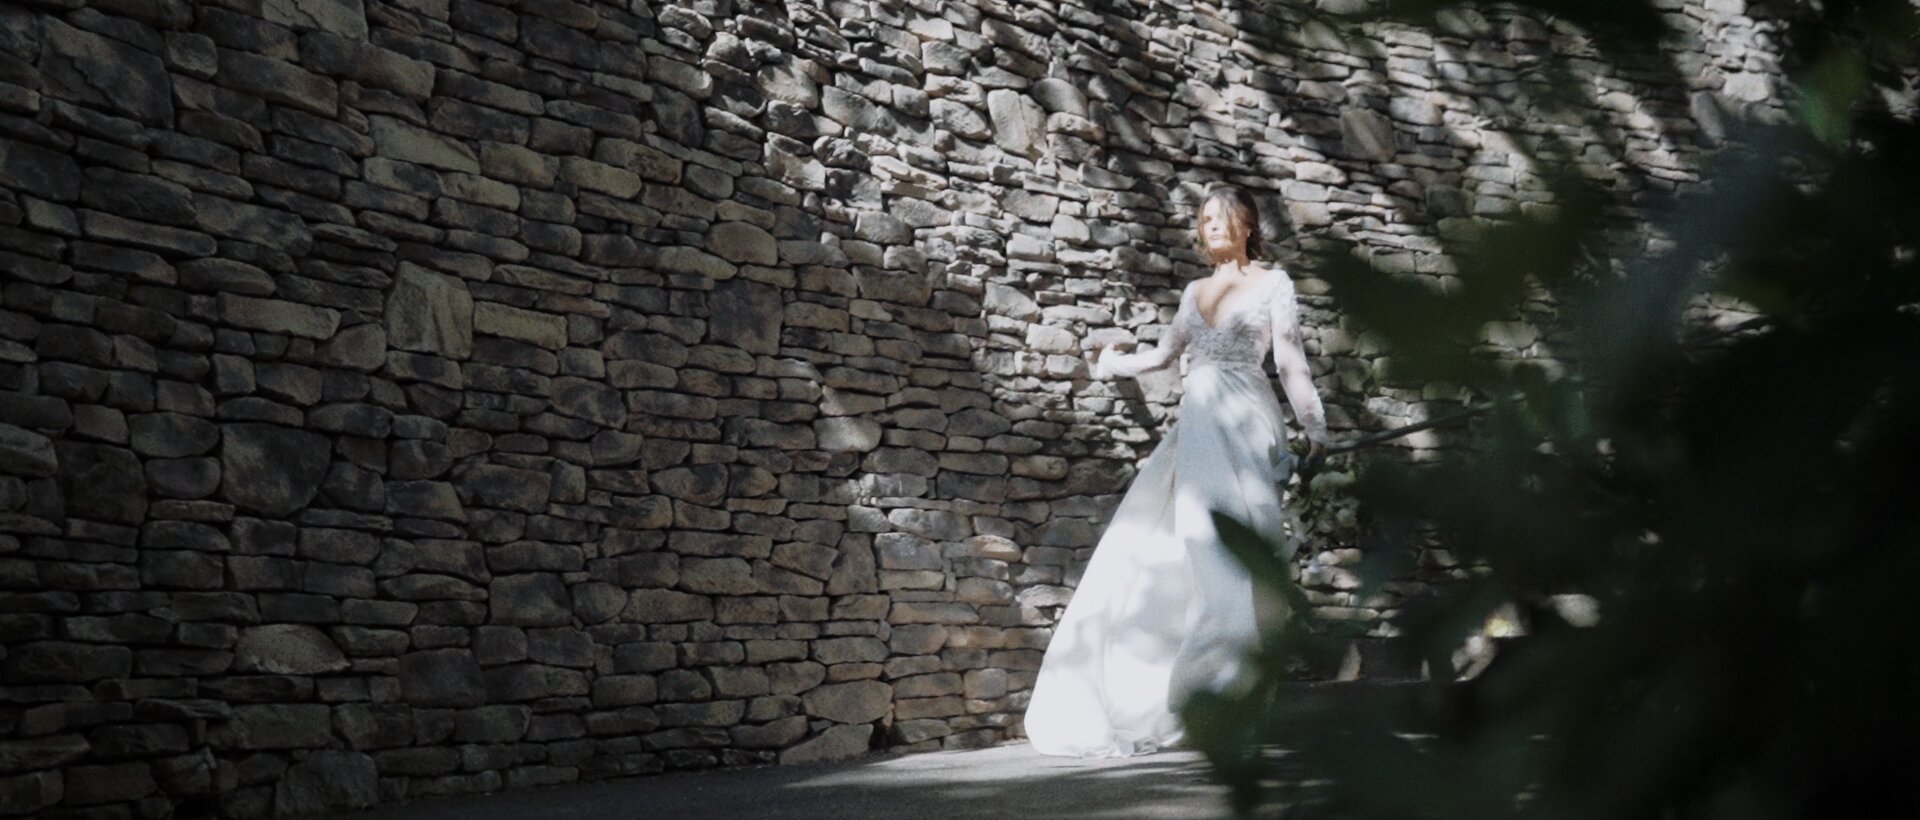 bride walking by Montage Kapalua stone wall